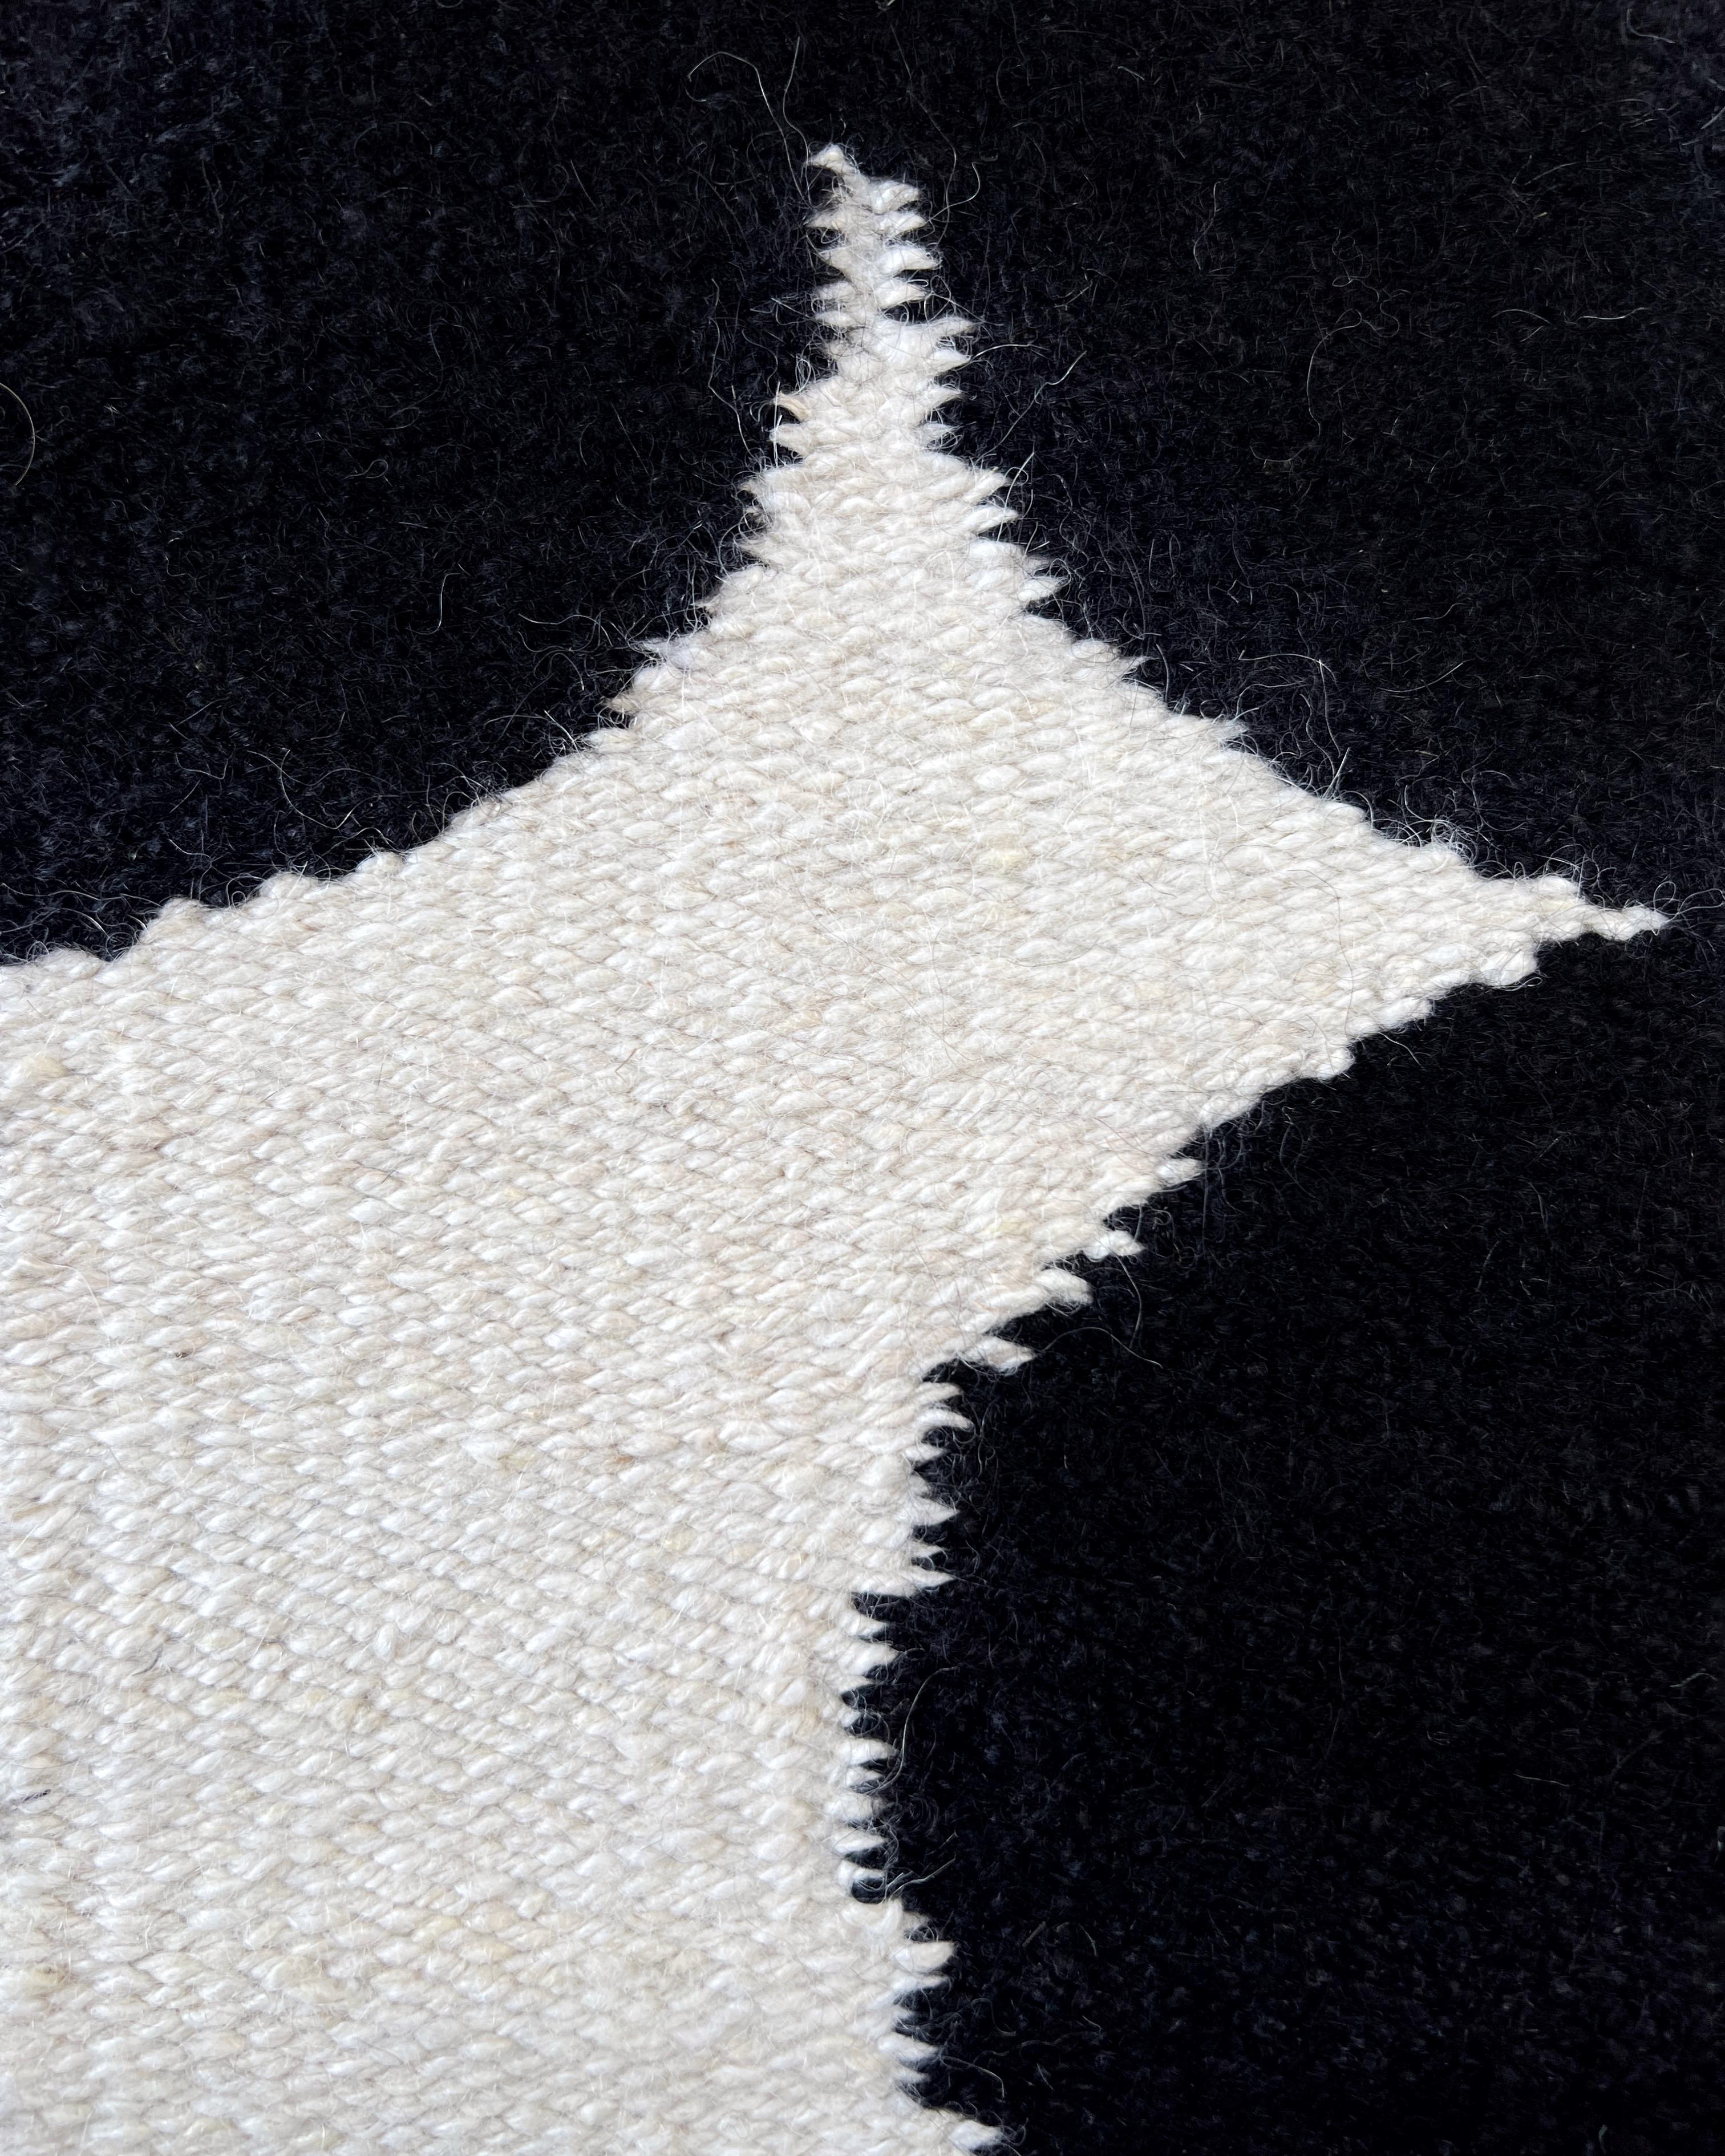 Argentine Hand-woven wool rug 